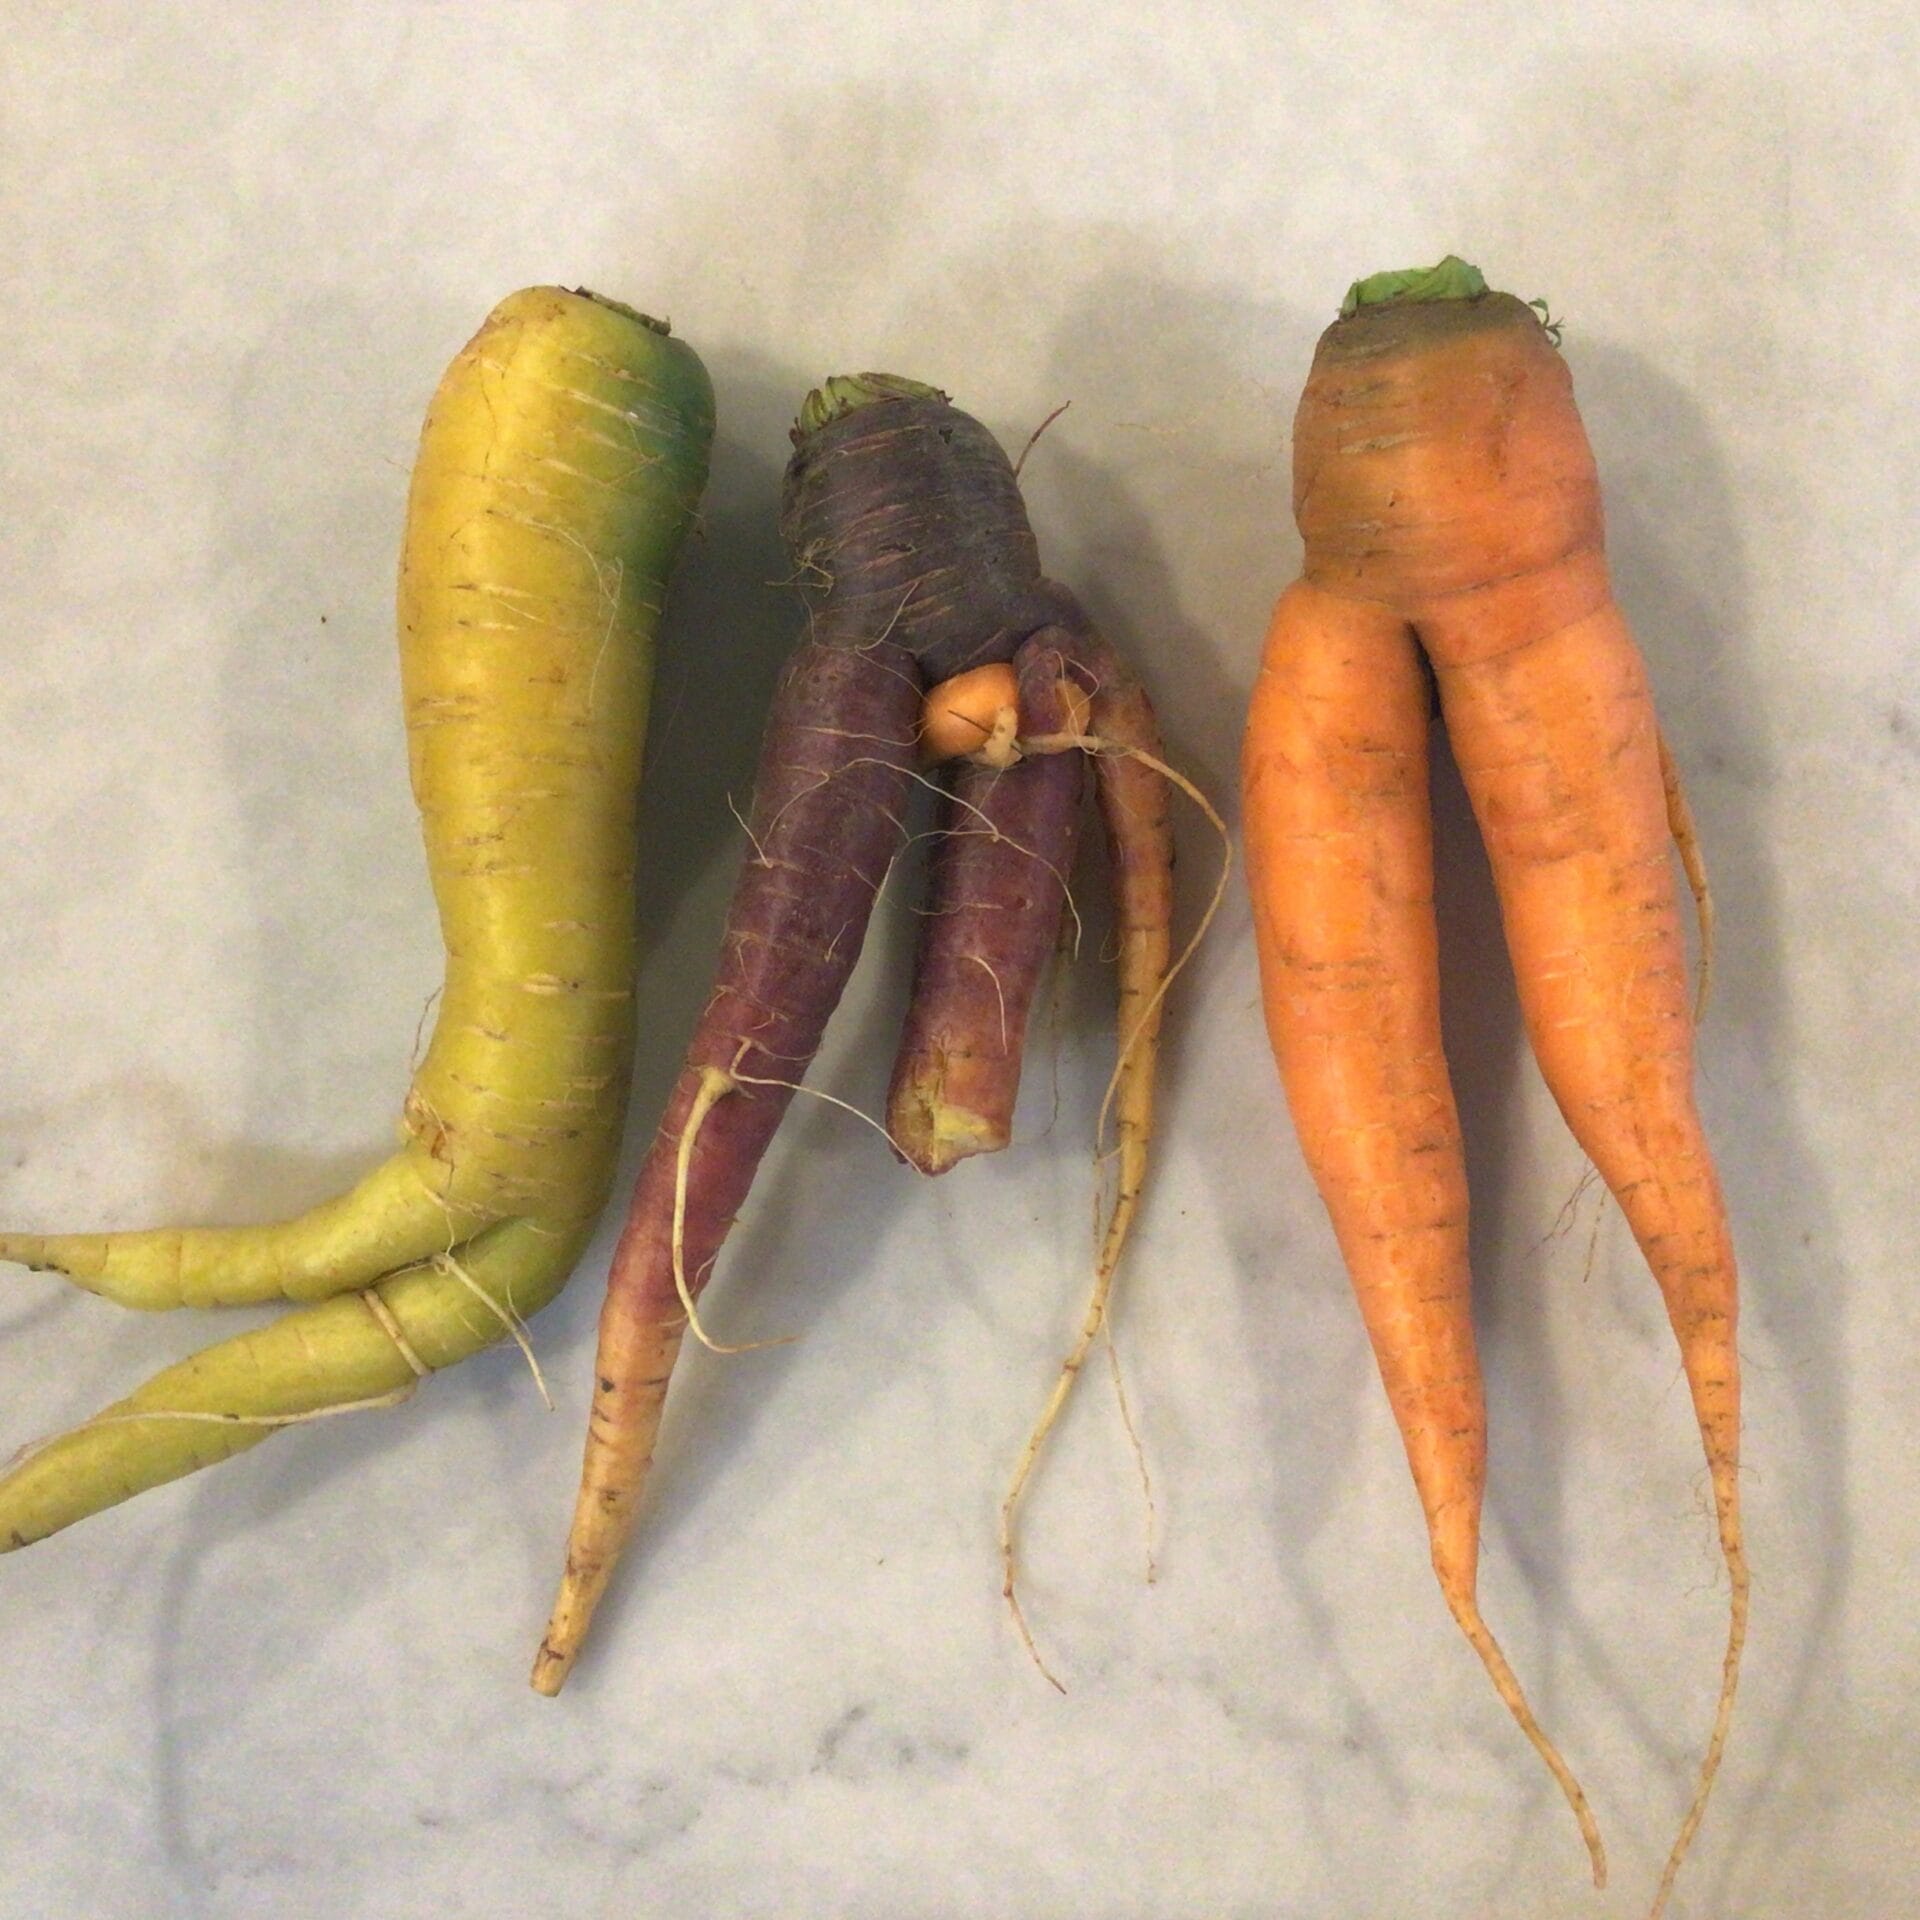 mixed carrots color shape